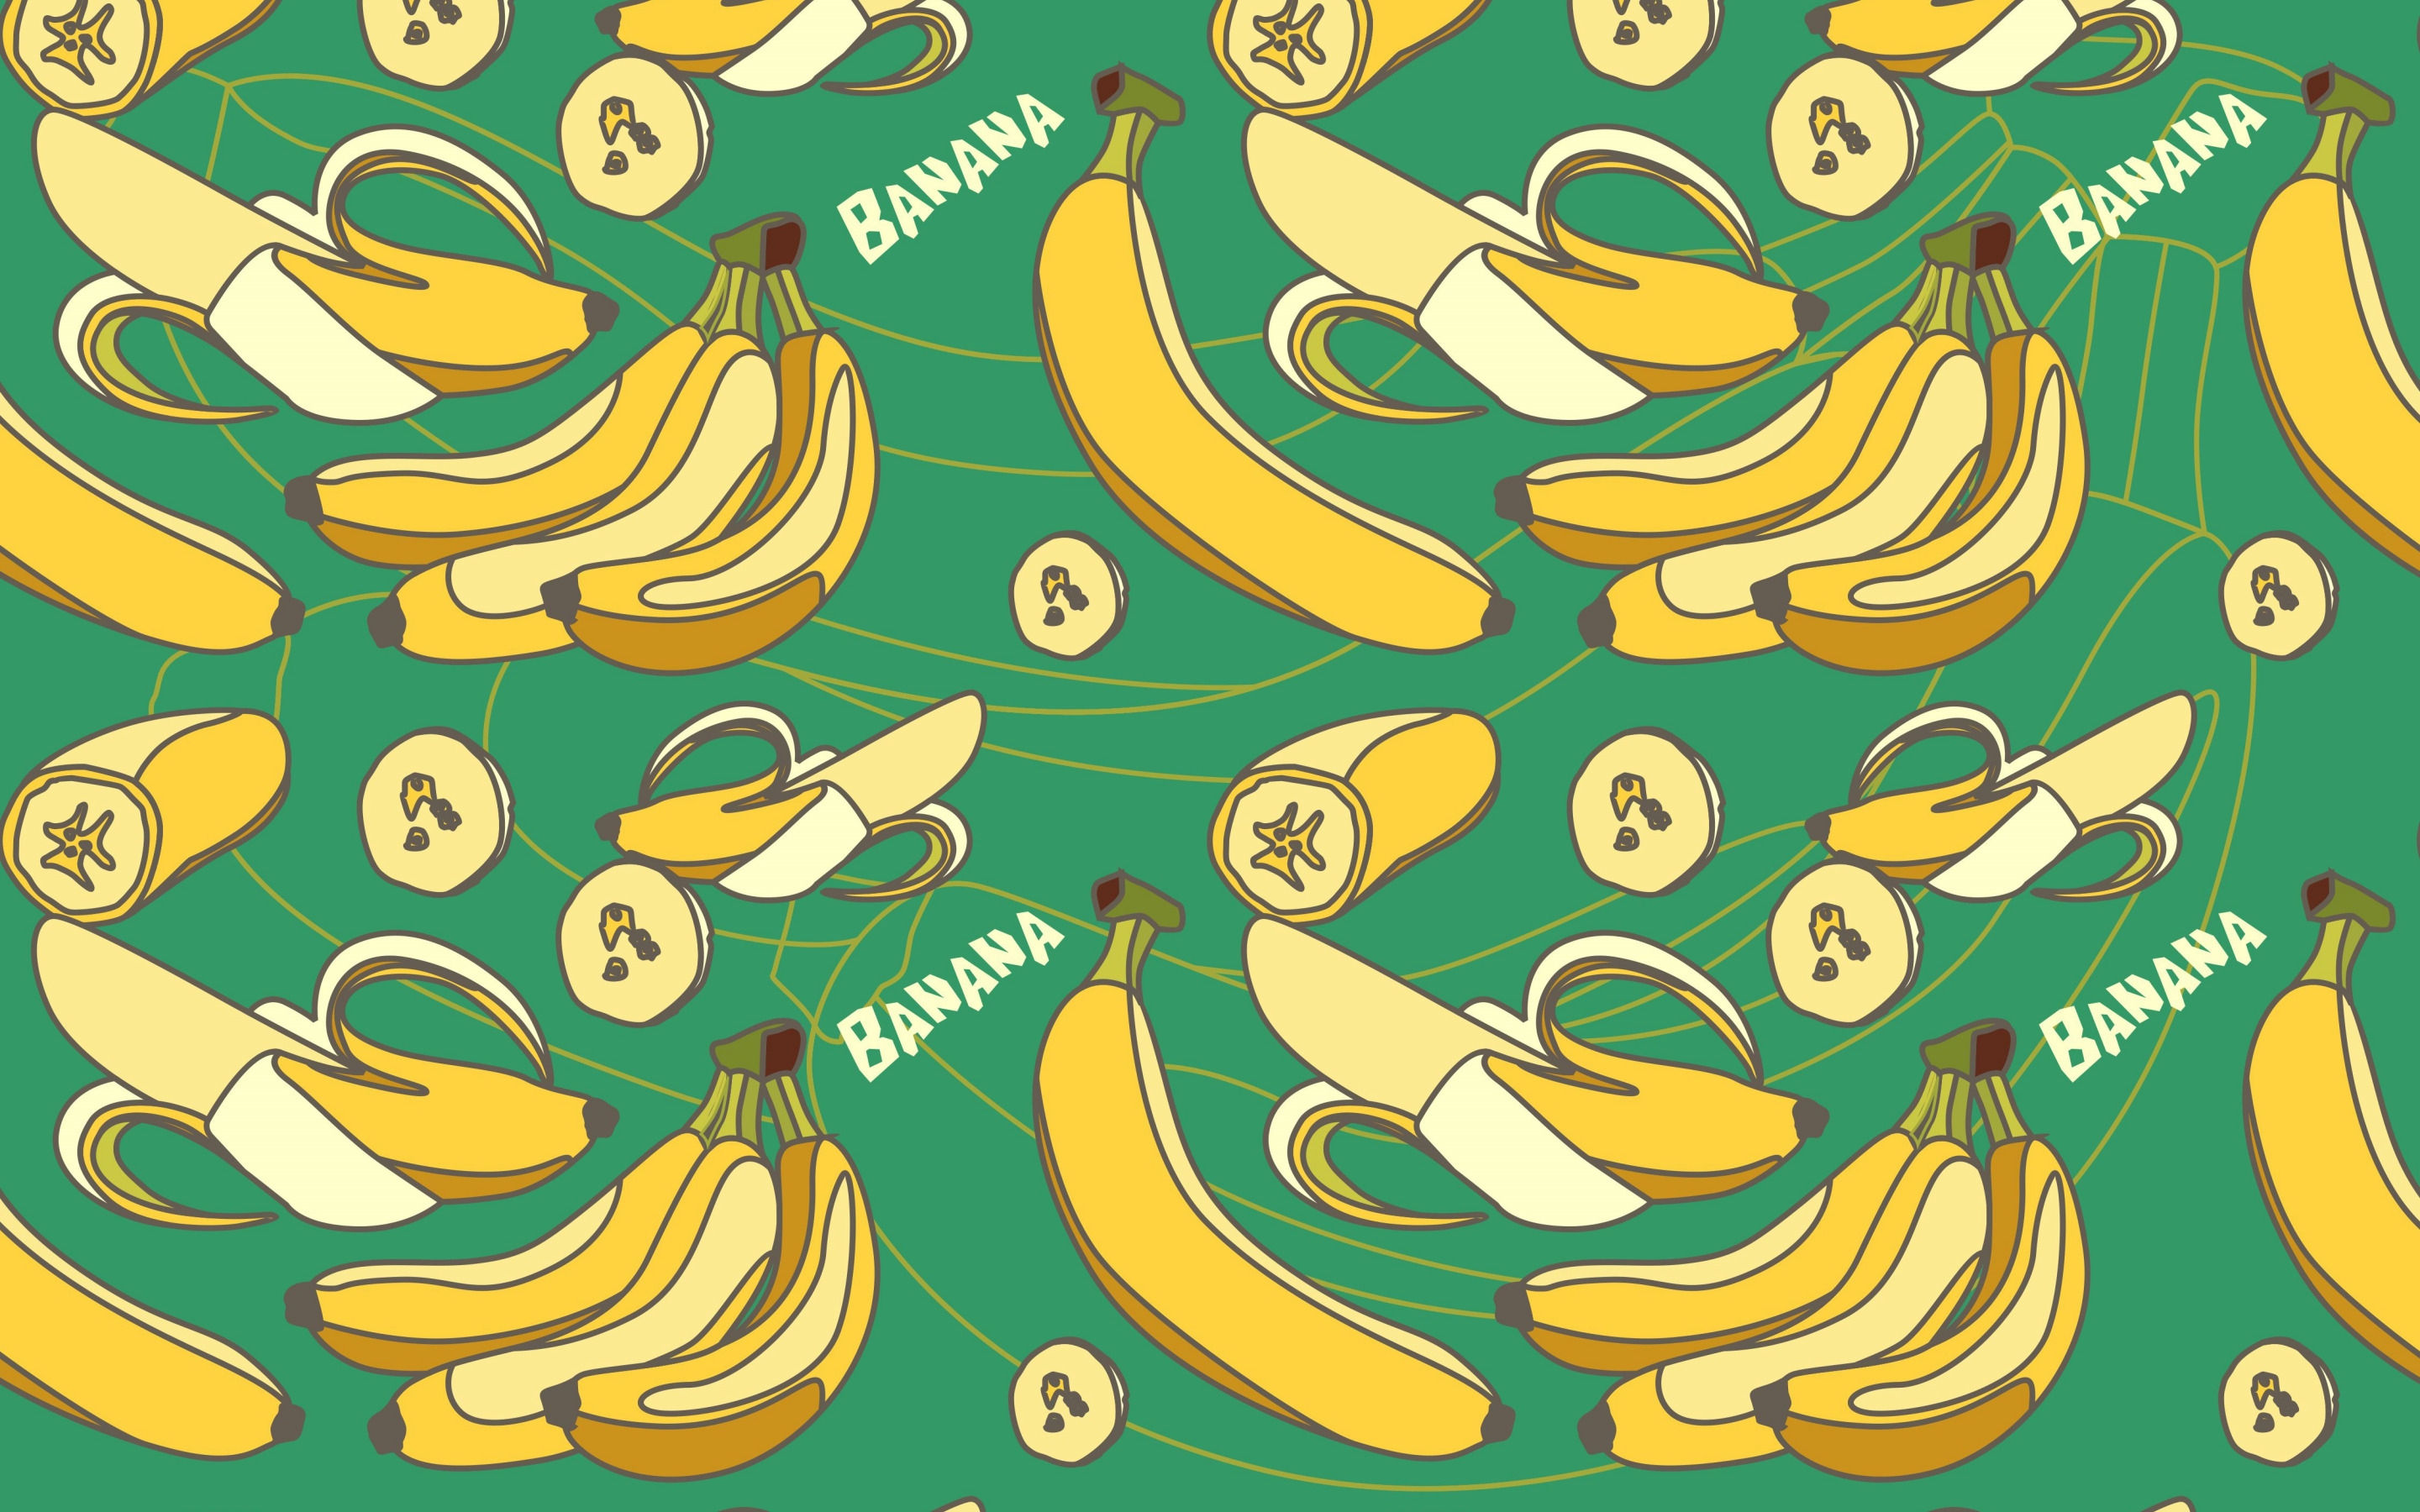 Bananas did you have. Бананы фон. Обои с бананами. Упаковочная бумага с бананами. Бананы паттерн.